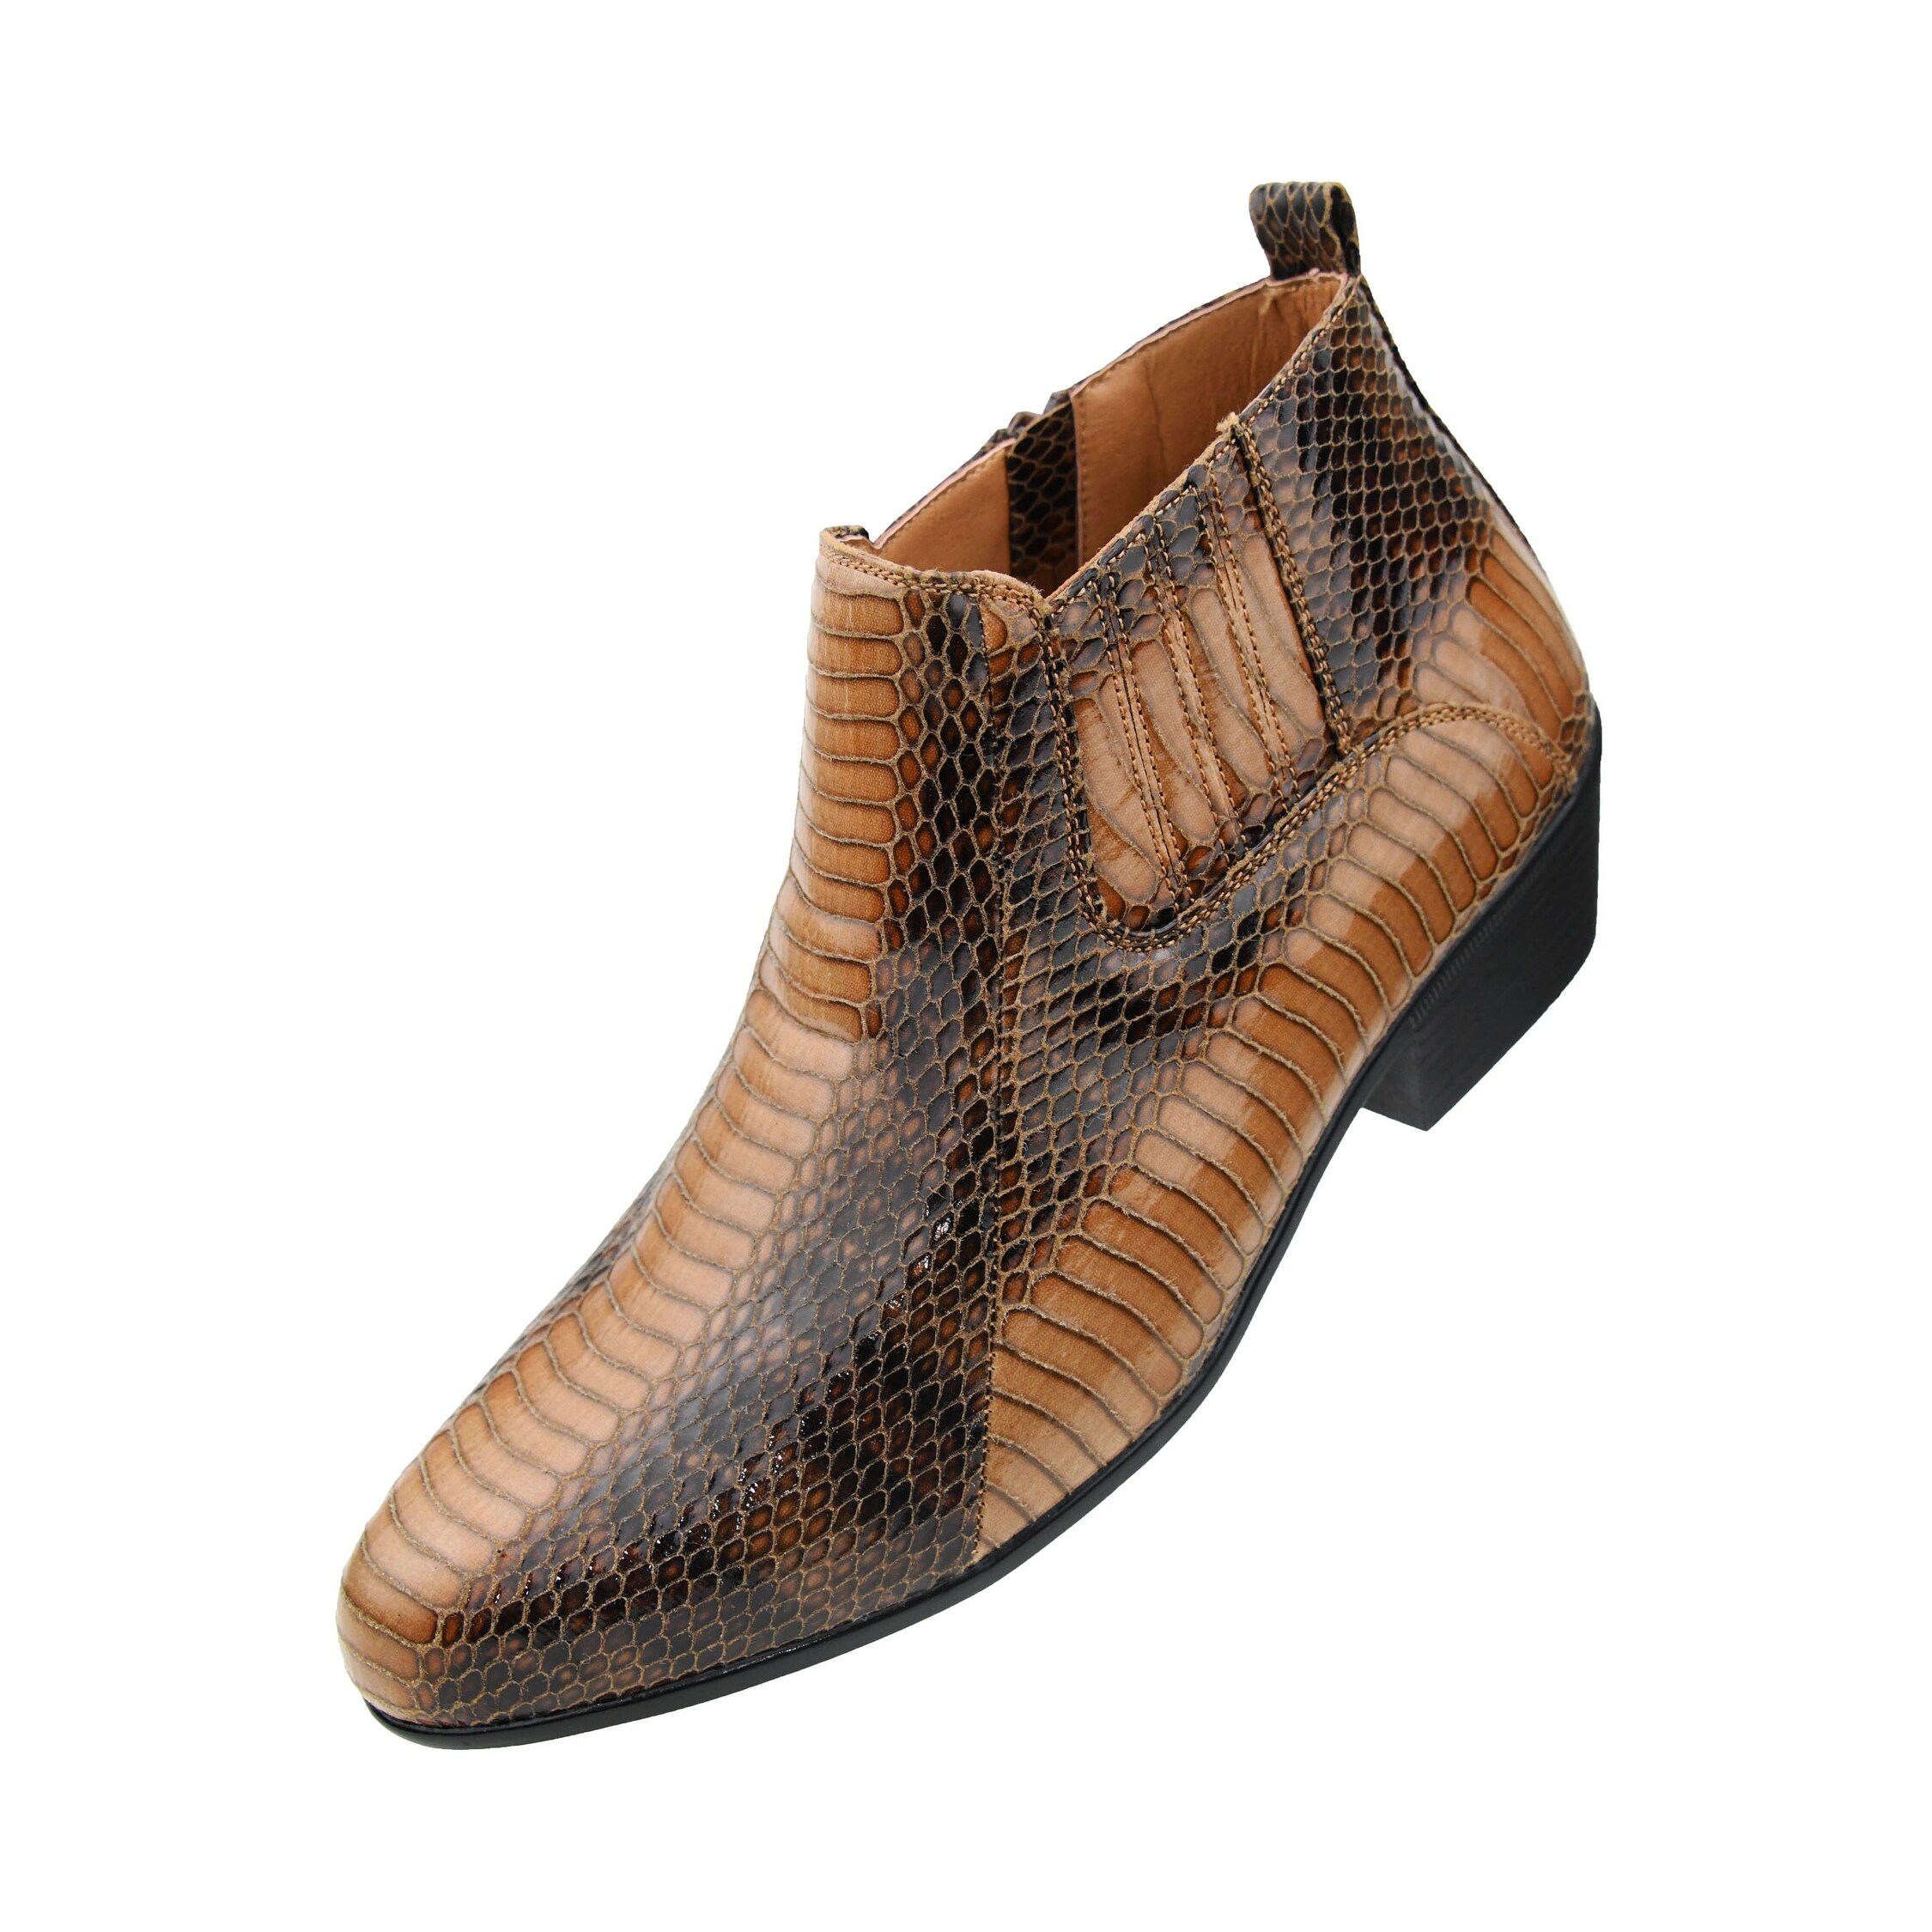 snakeskin dress boots